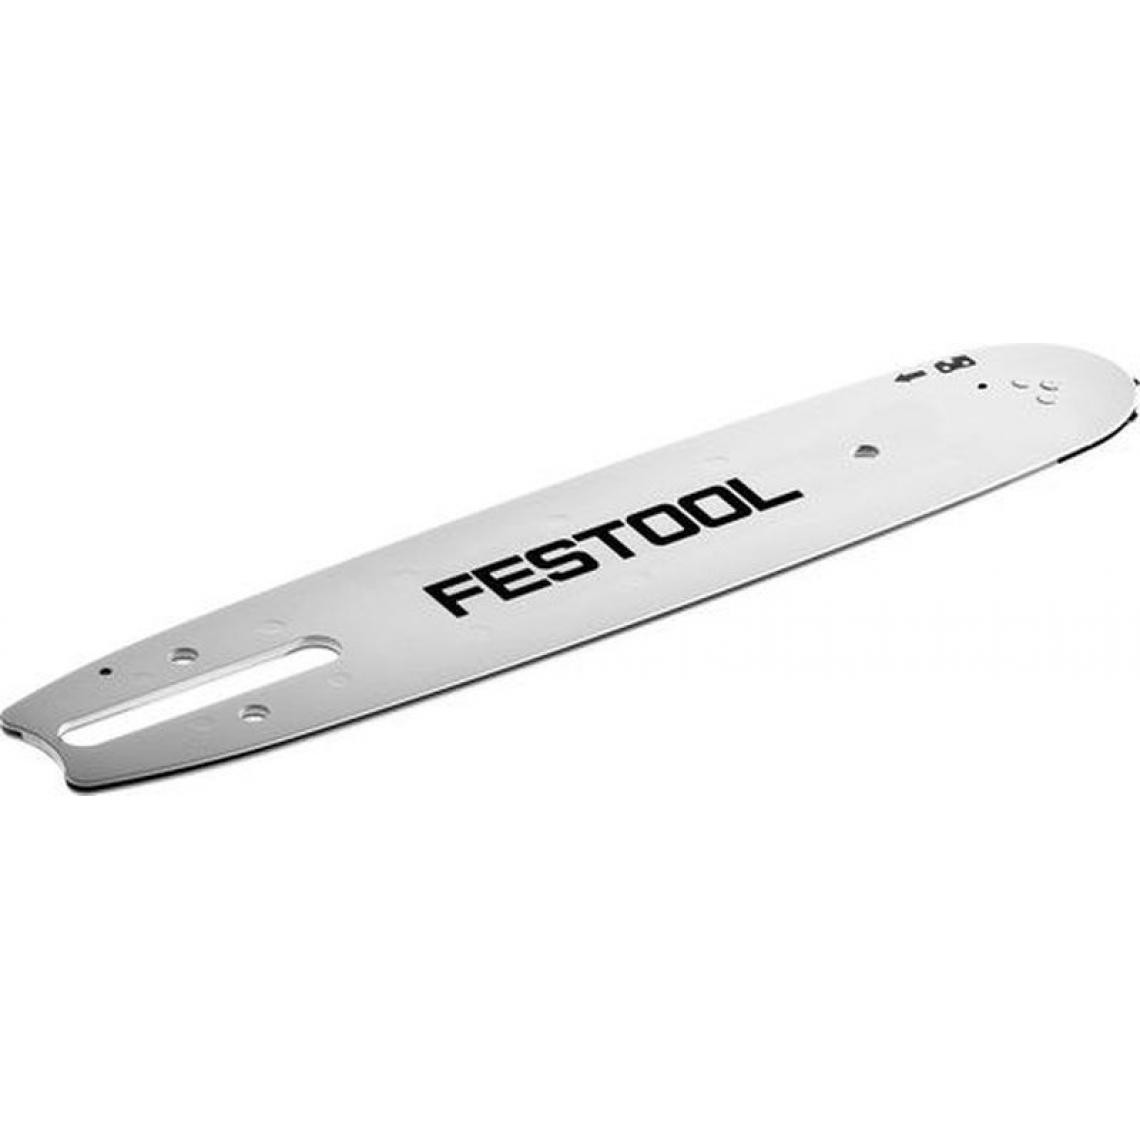 Festool - Lame FESTOOL GB 13- IS 330 - 769089 - Accessoires sciage, tronçonnage